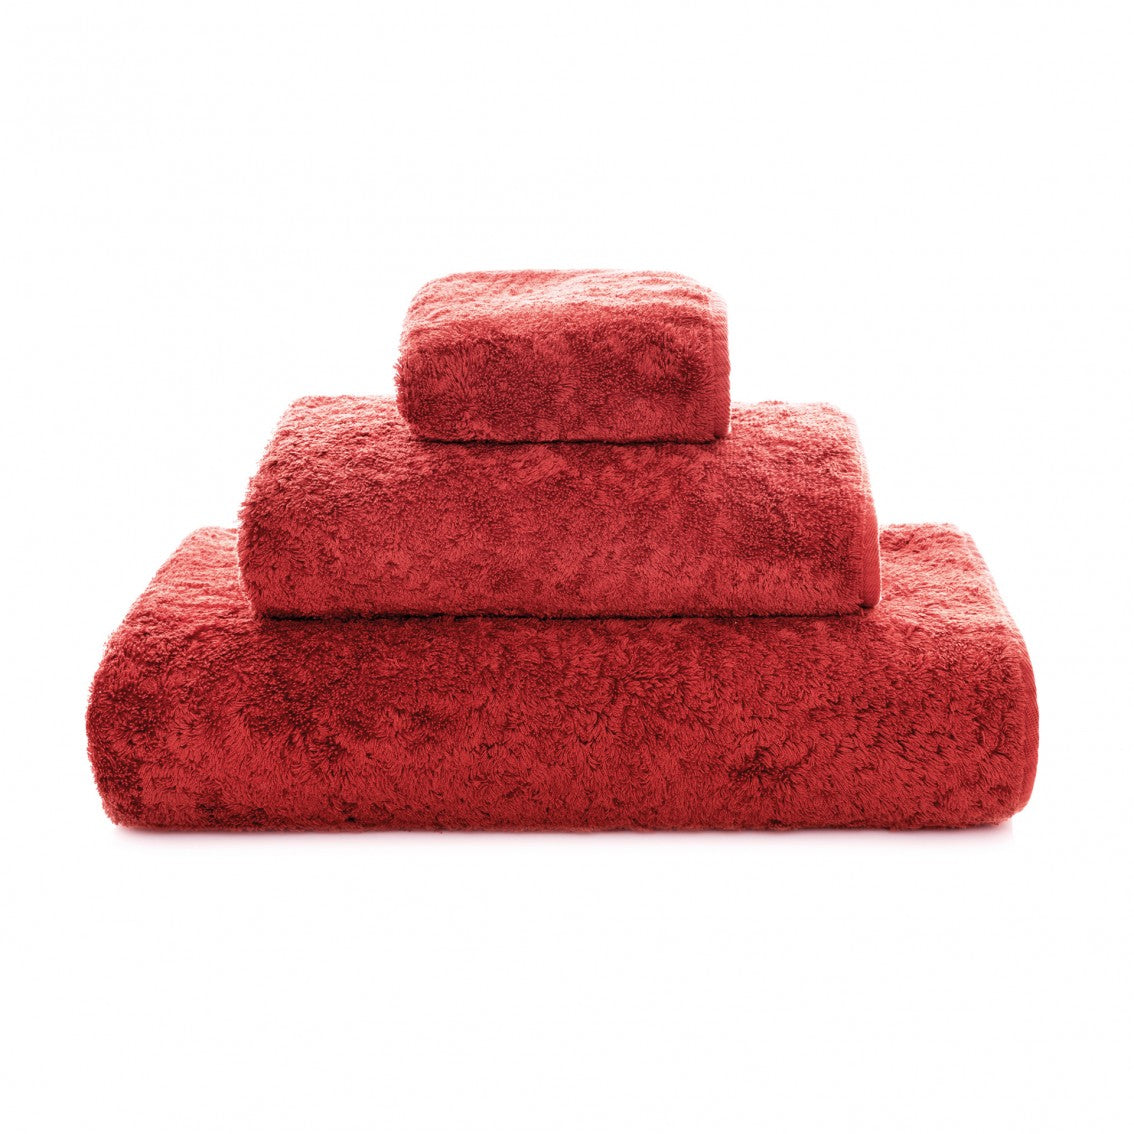 Graccioza Egoist Face Towels